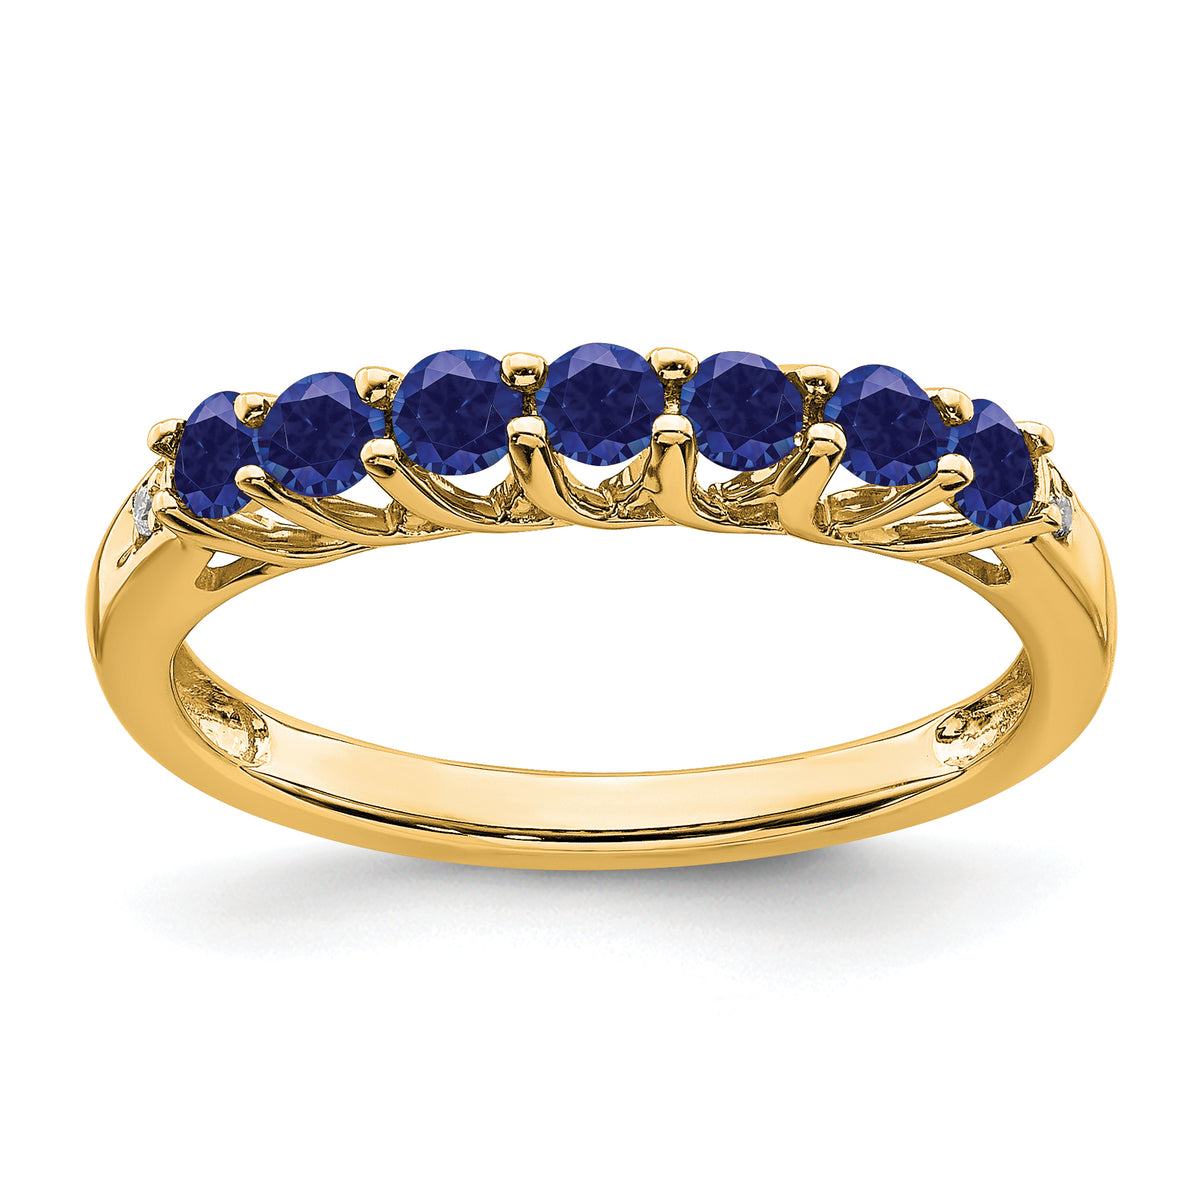 10k Created Sapphire and Diamond 7-stone Ring